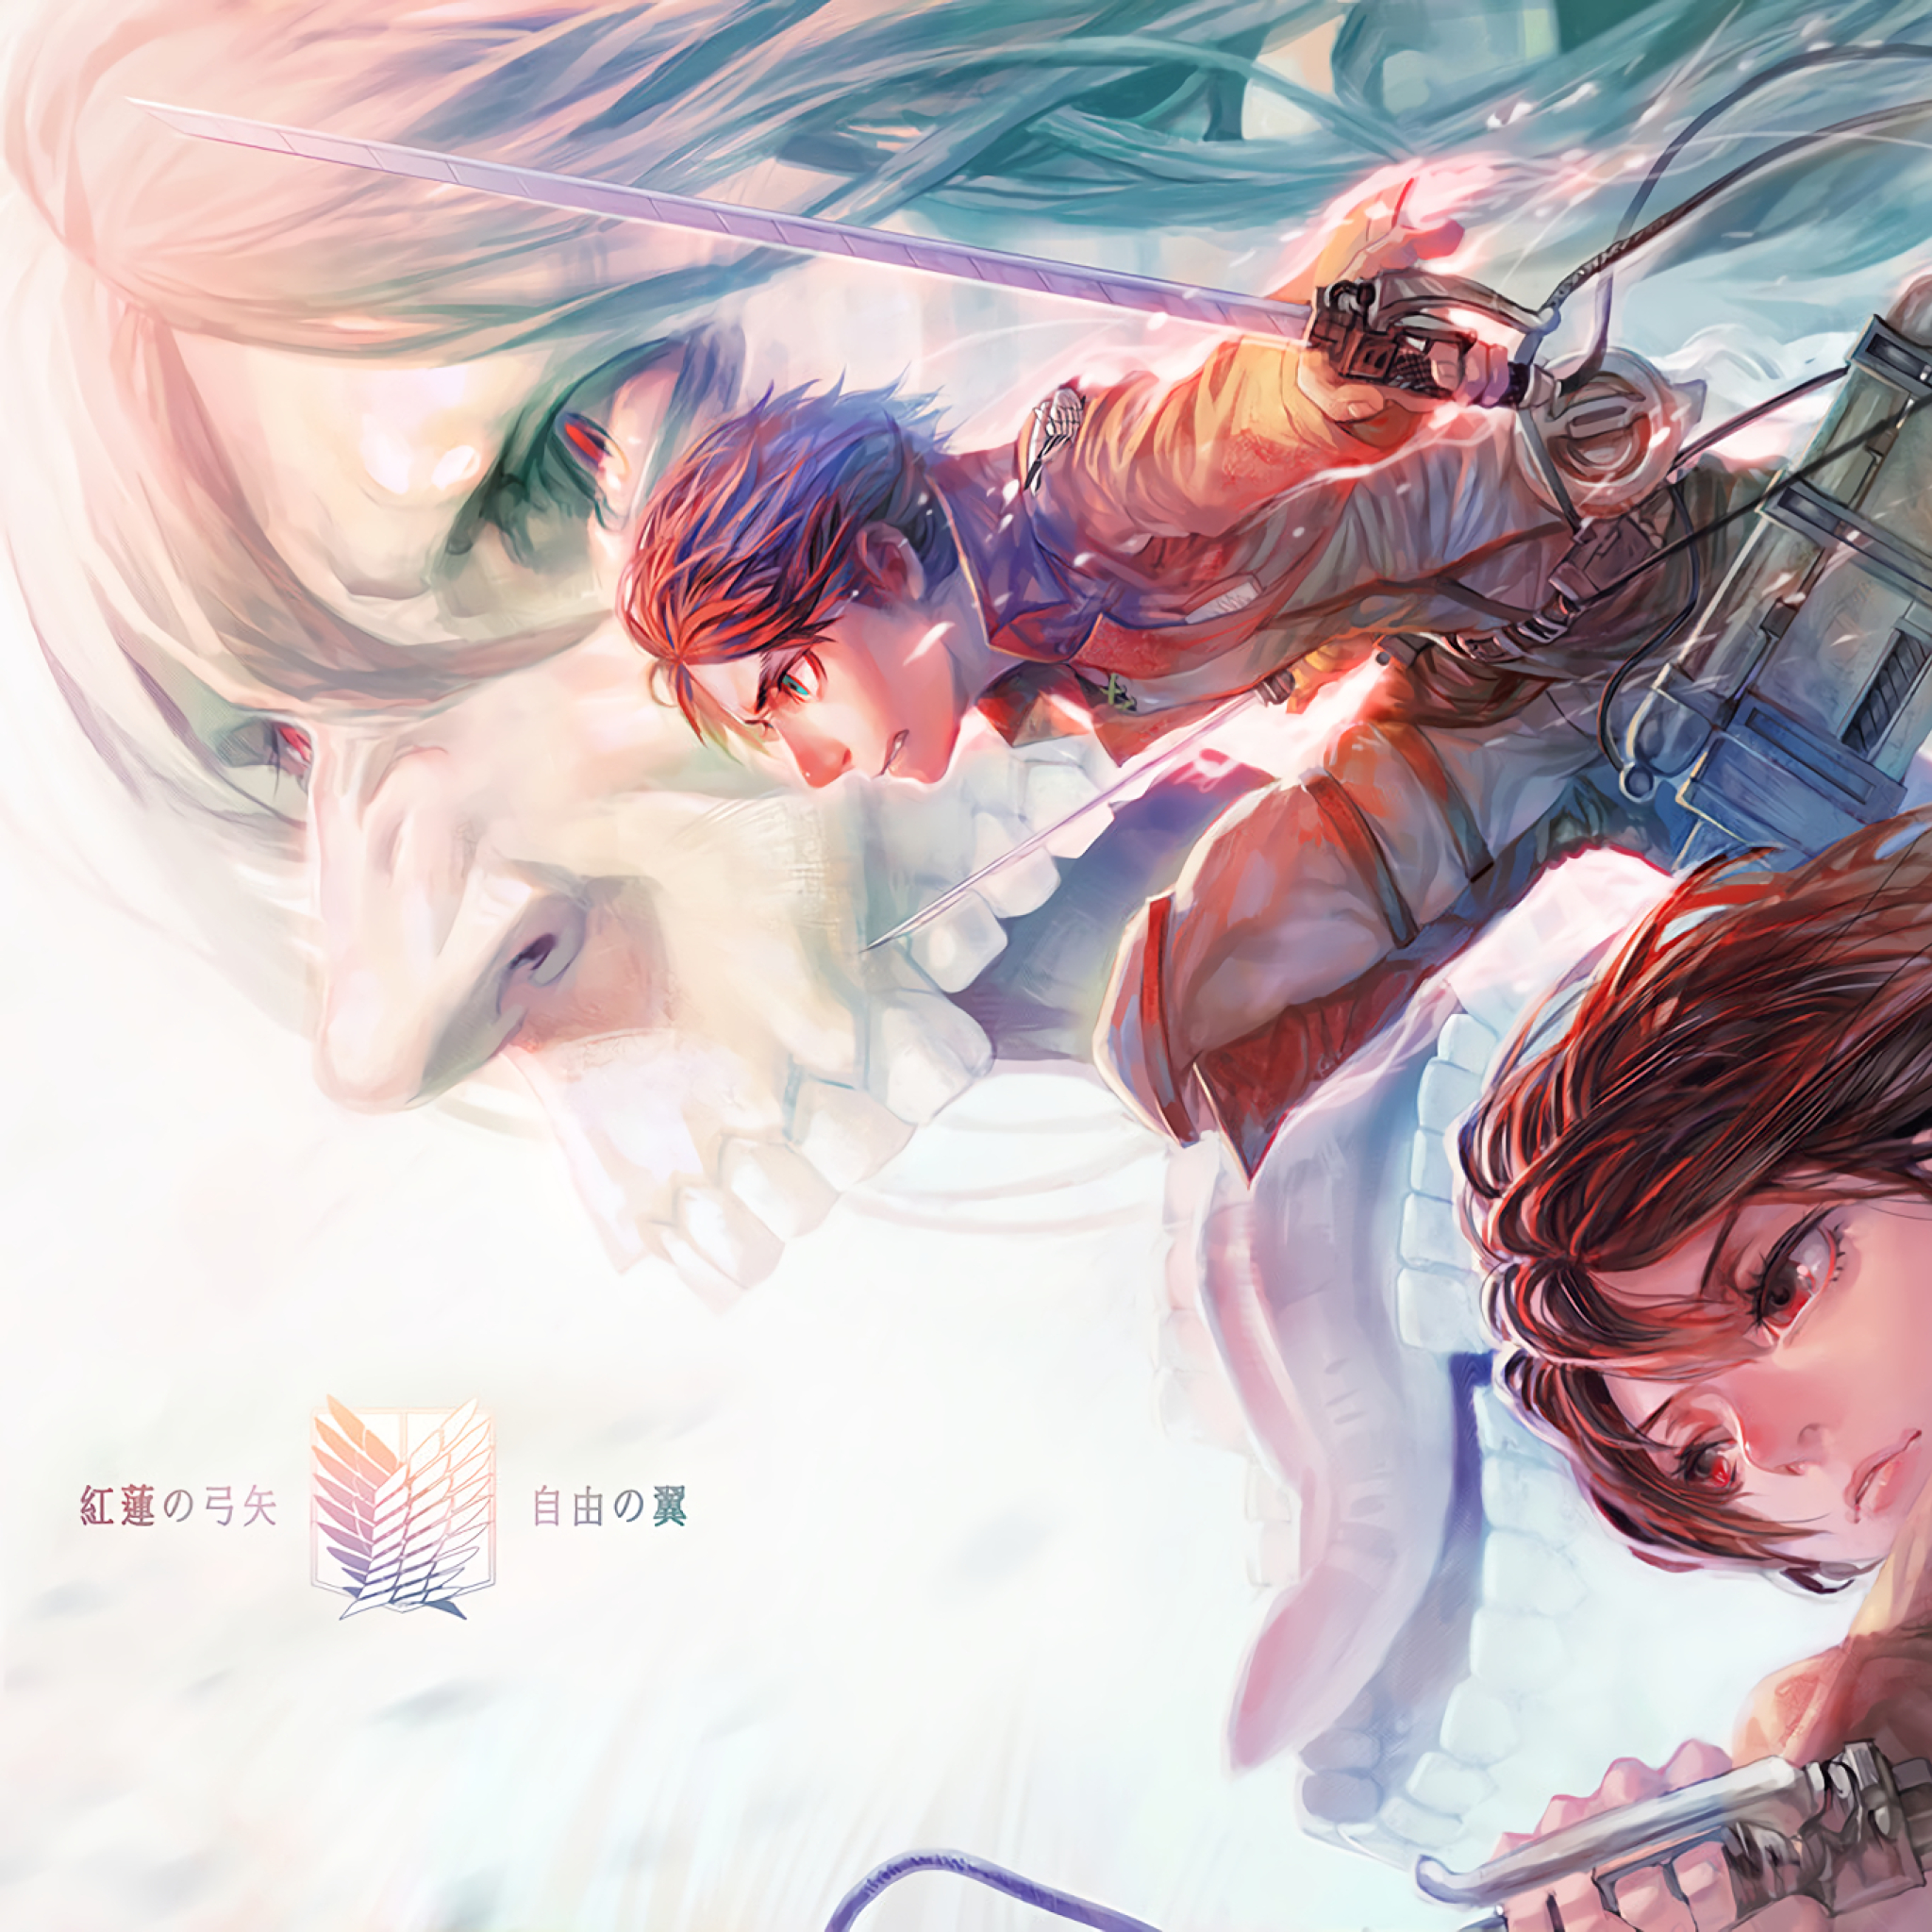 Armin Arlert  Attack on Titan  Mobile Wallpaper by Haruki Harumoti  1630423  Zerochan Anime Image Board Mobile